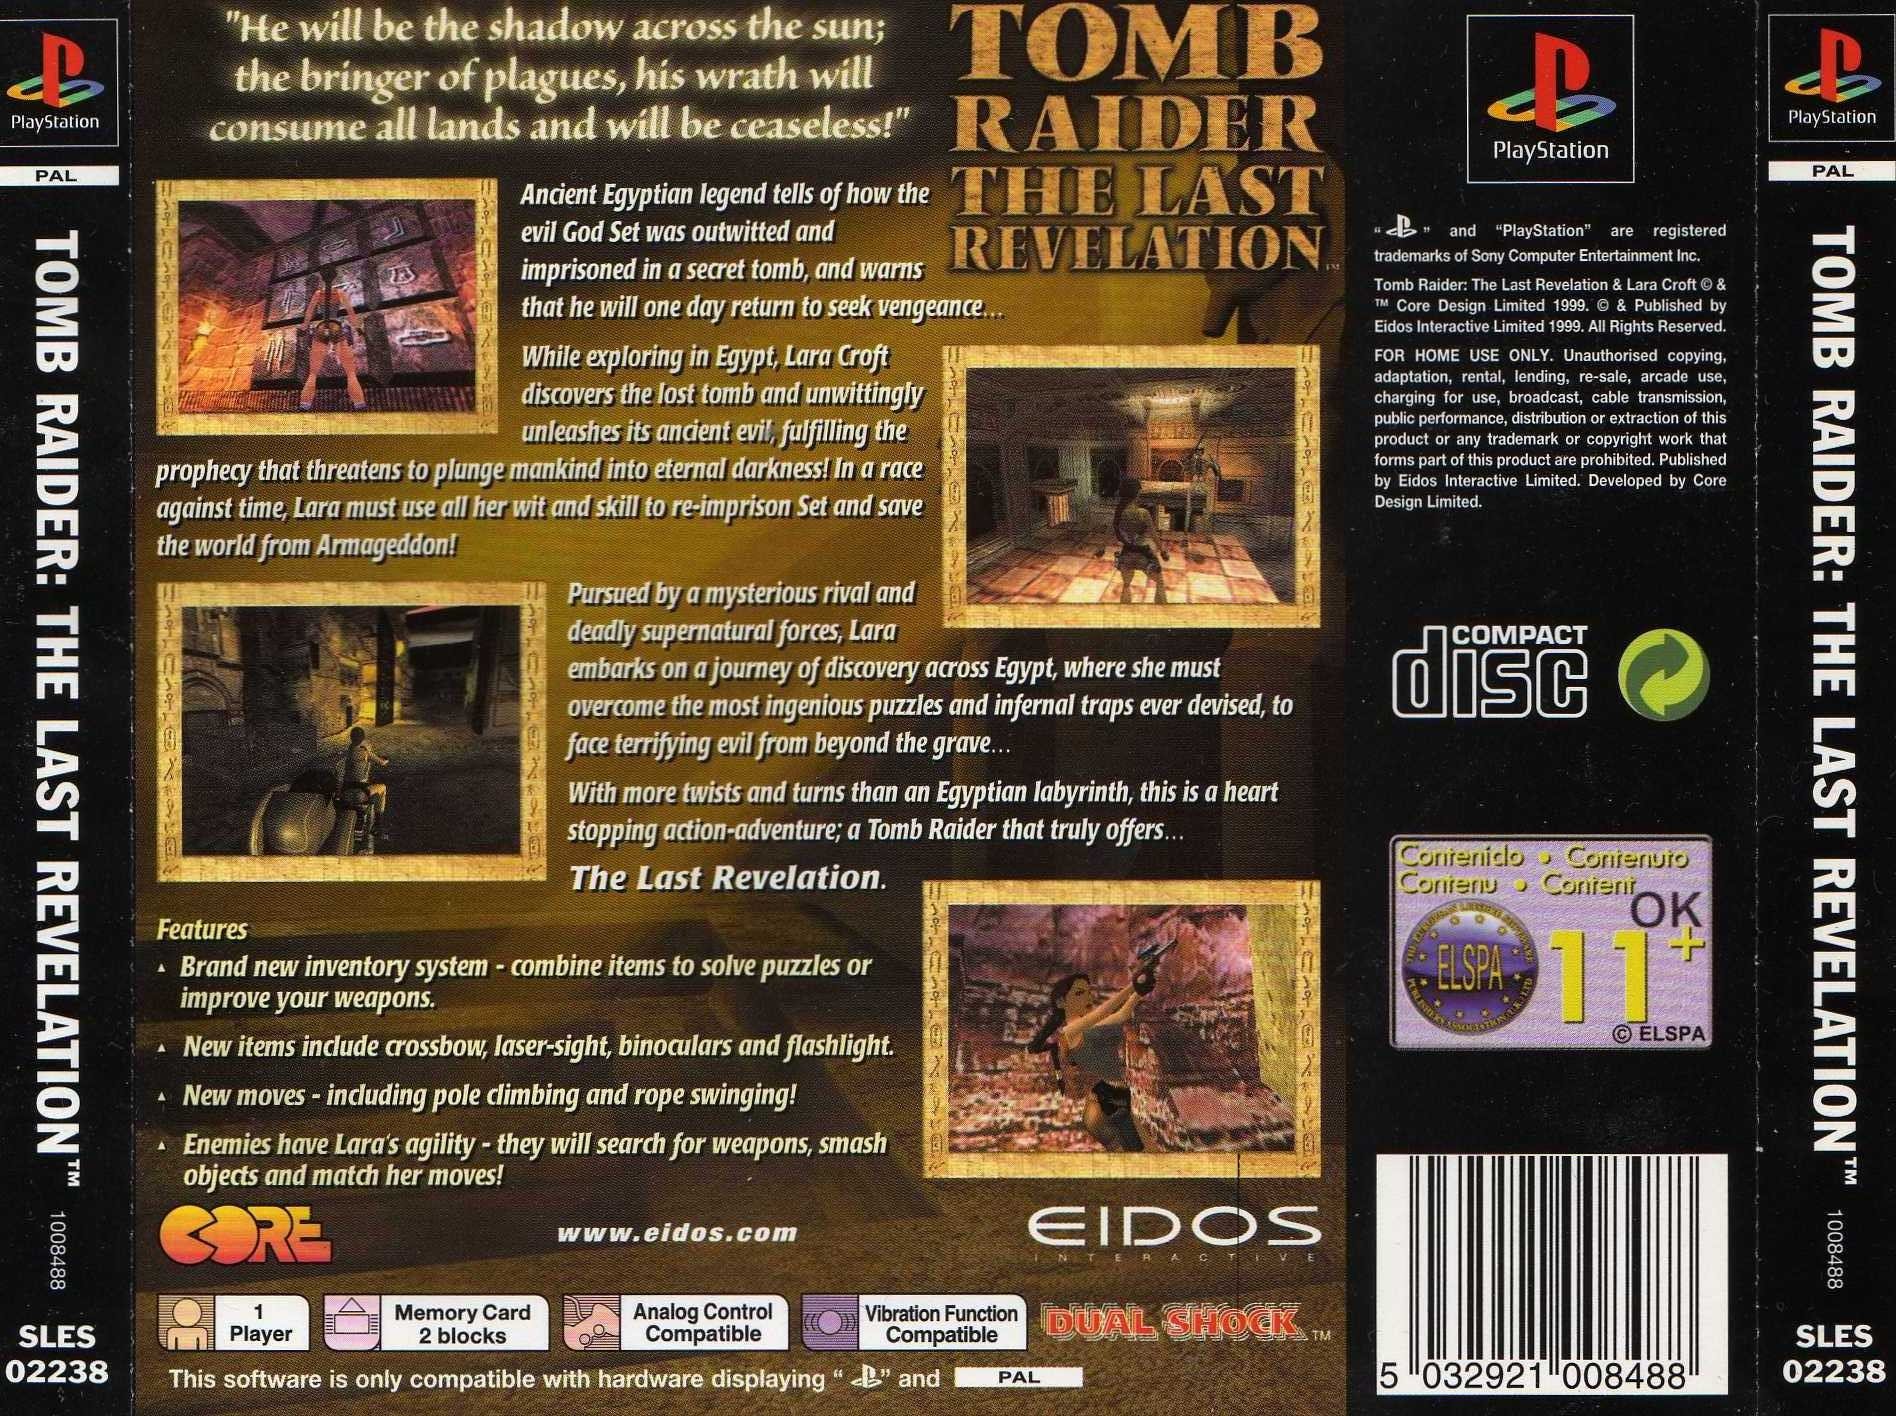 Tomb Raider - The Last Revelation PSX cover